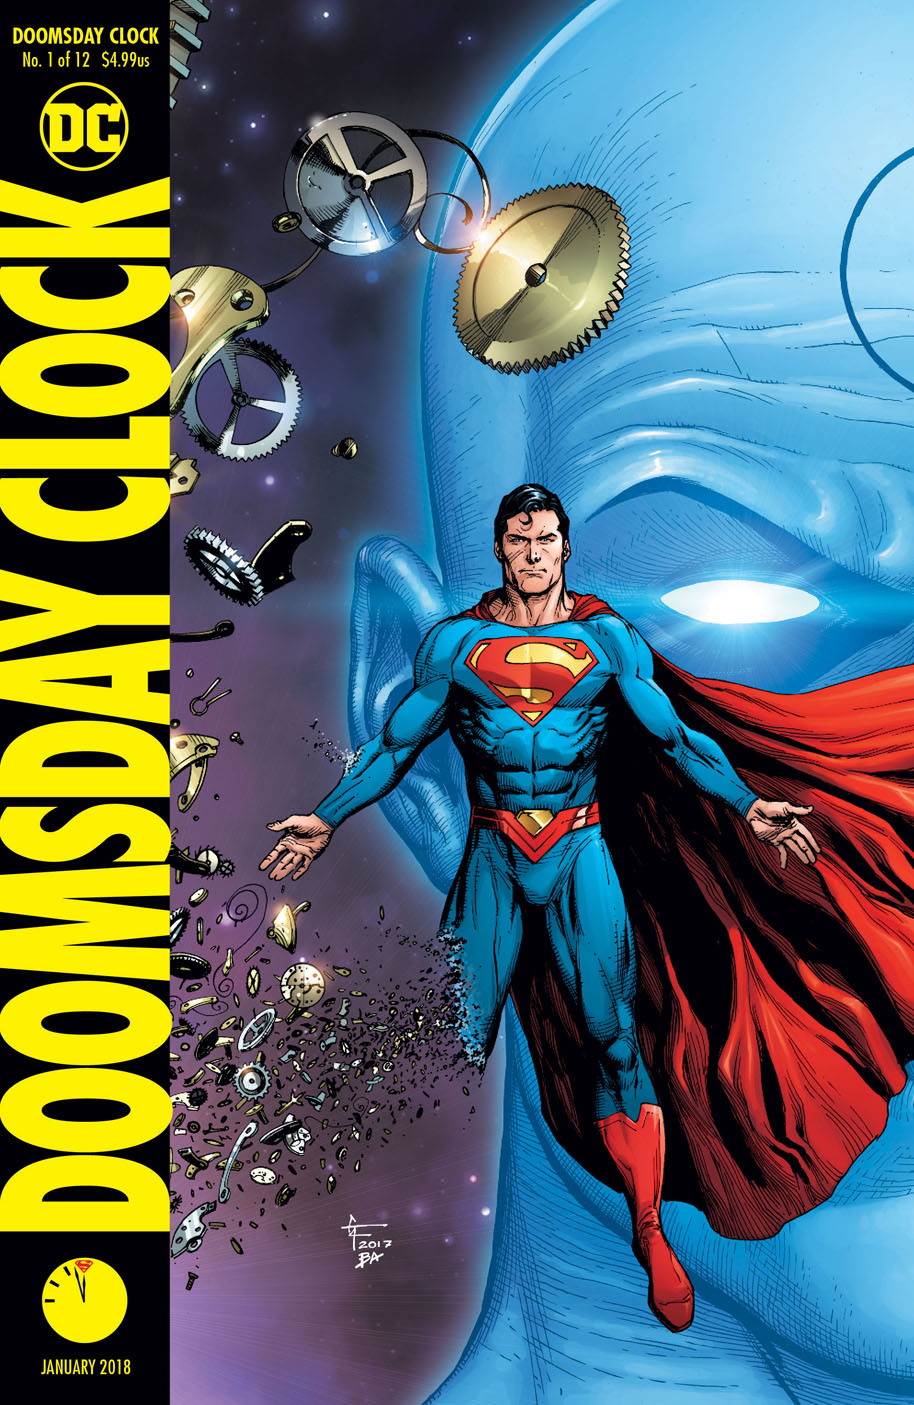  [DC COMICS] Publicaciones Universo DC: Discusión General v2 - Página 10 Variant-cover-of-doomsday-clock-1-with-superman-and-doctor-manhattan